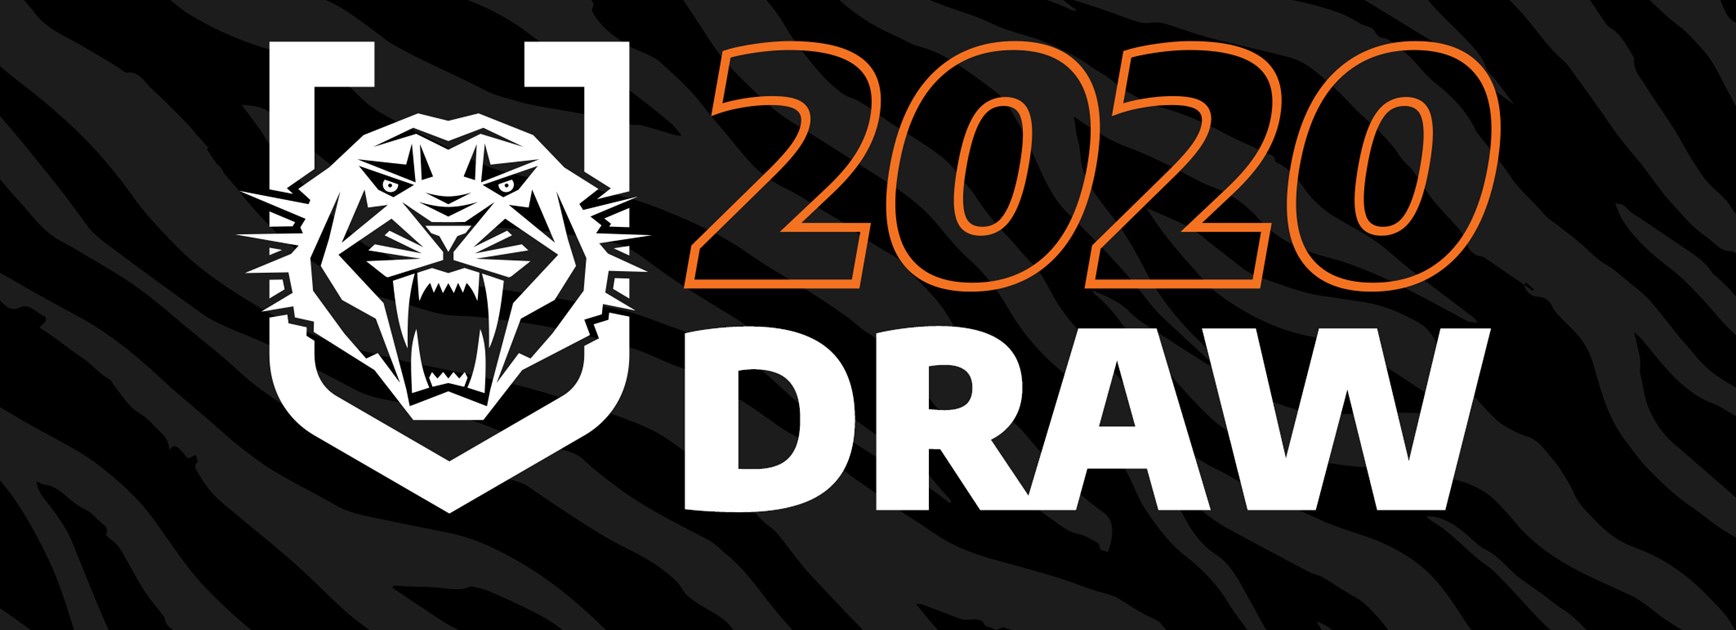 Wests Tigers 2020 NRL Draw